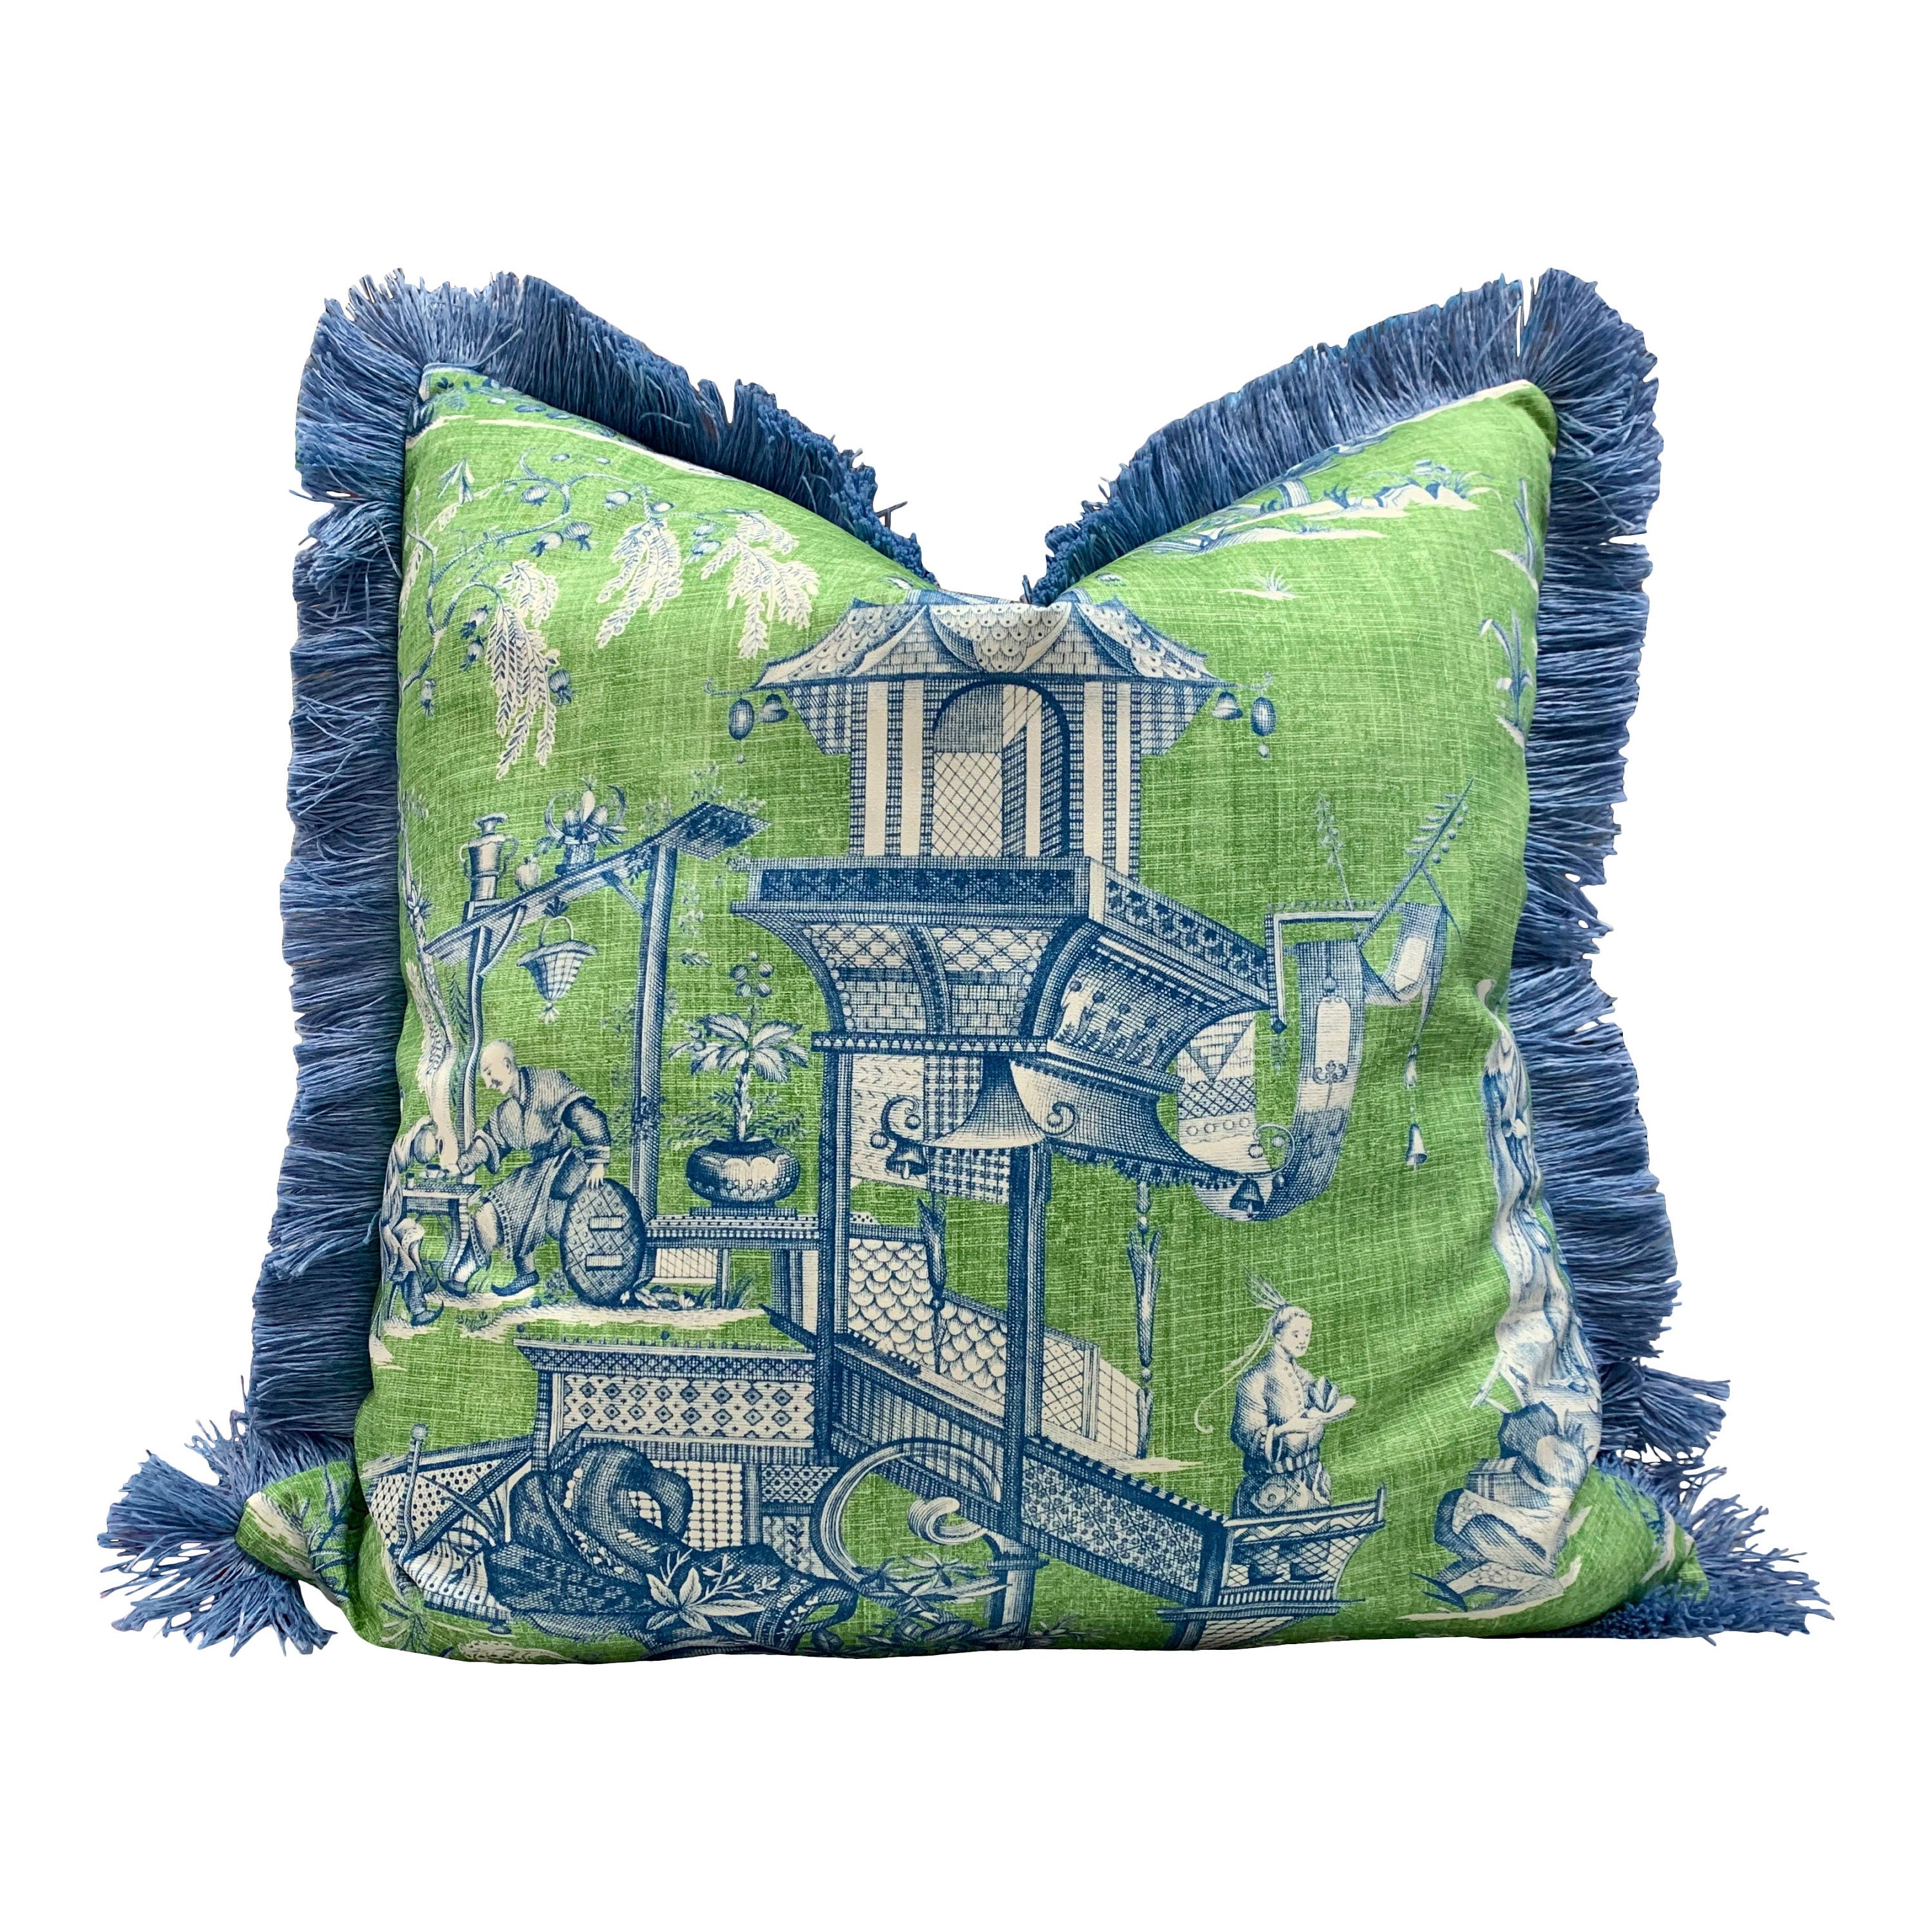 Cheng Toile Pillow in Green and Blue. Chinoiserie Pillow Cover, Designer Pillow, Decorative Pillow, Accent lumbar pillow, Pagoda Pillow